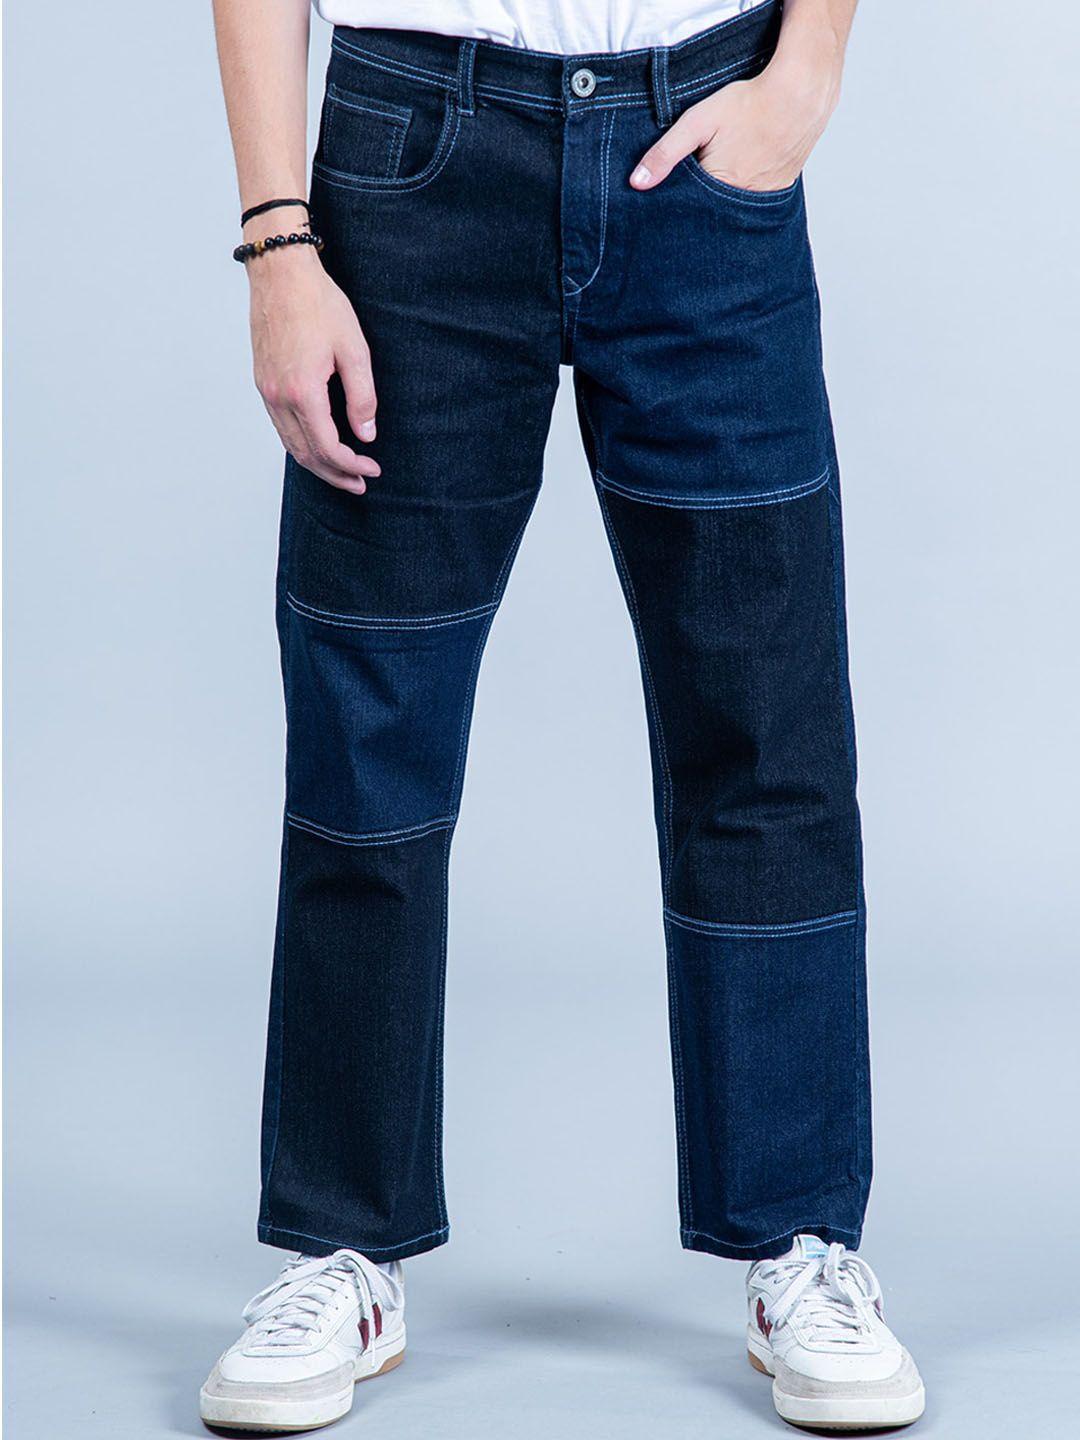 tistabene-men-comfort-straight-fit-clean-look-cotton-jeans